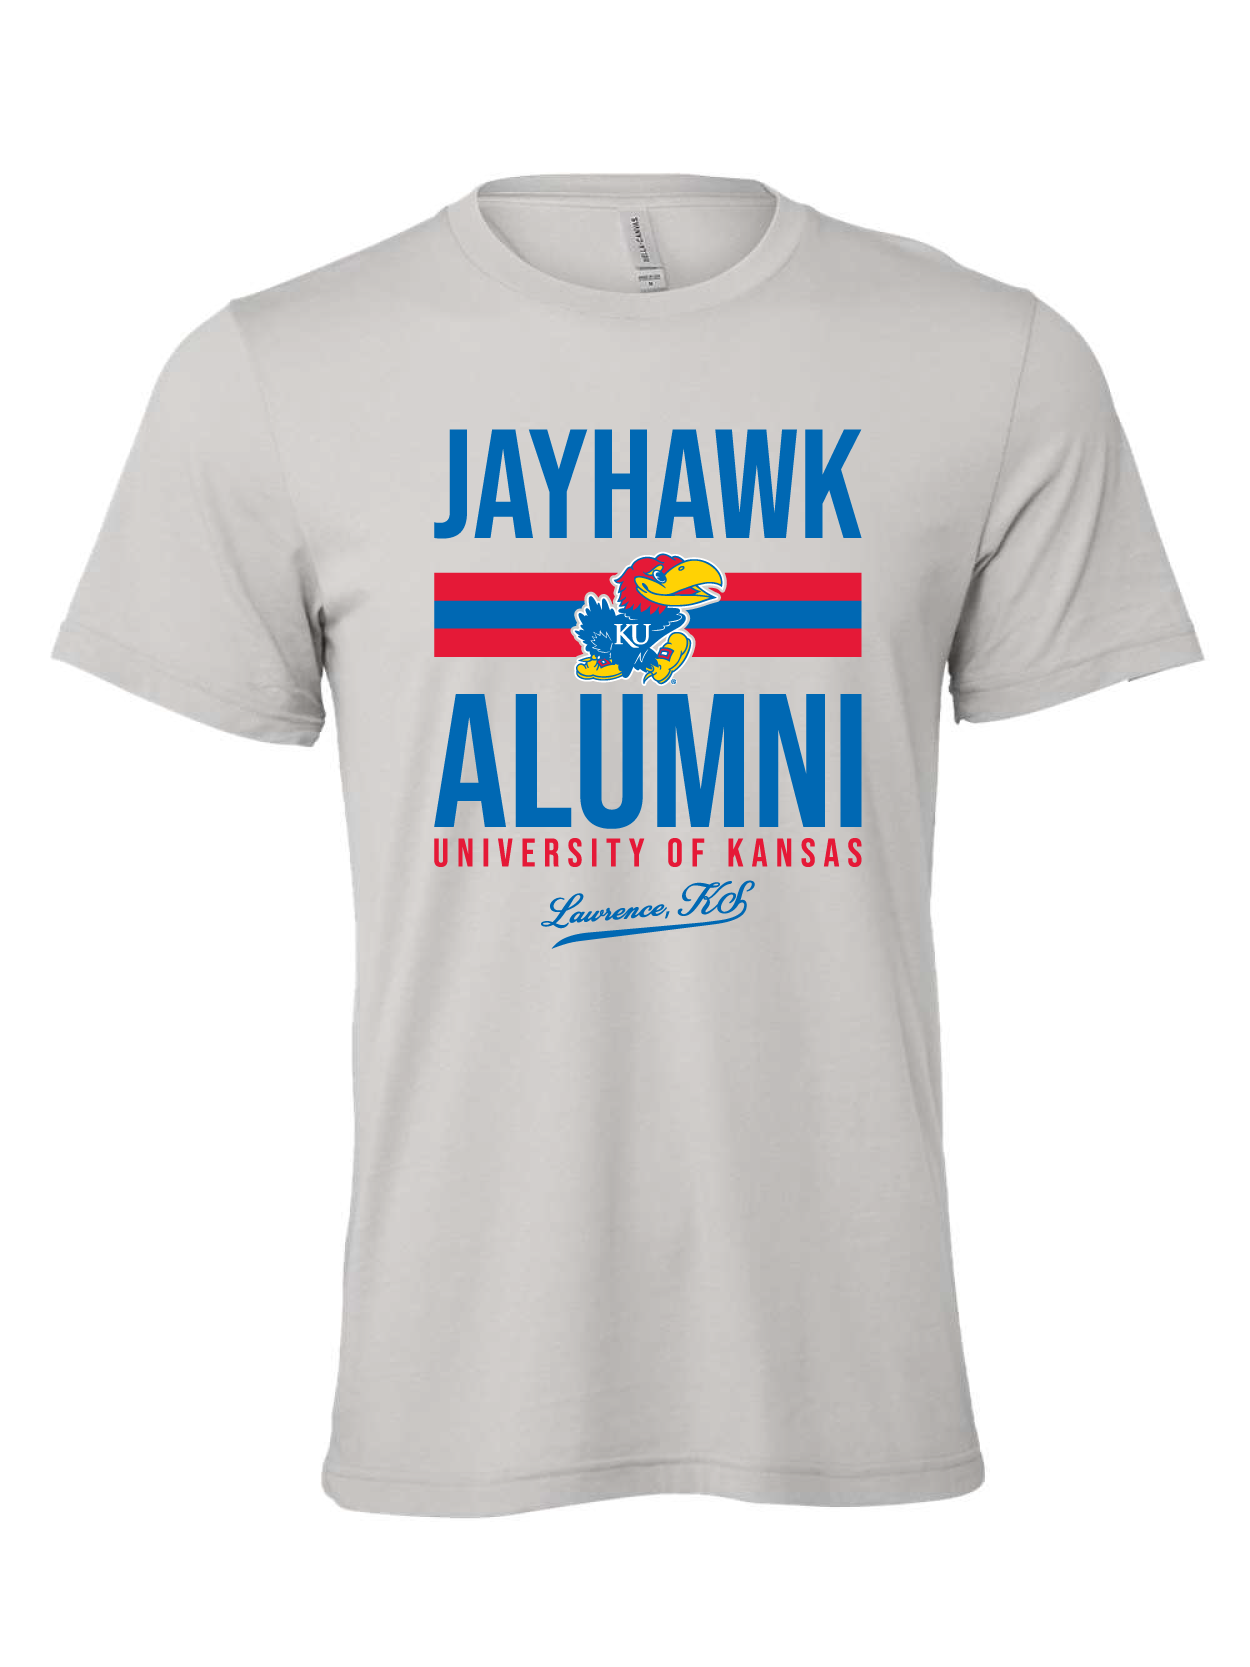 Jayhawk Alumni